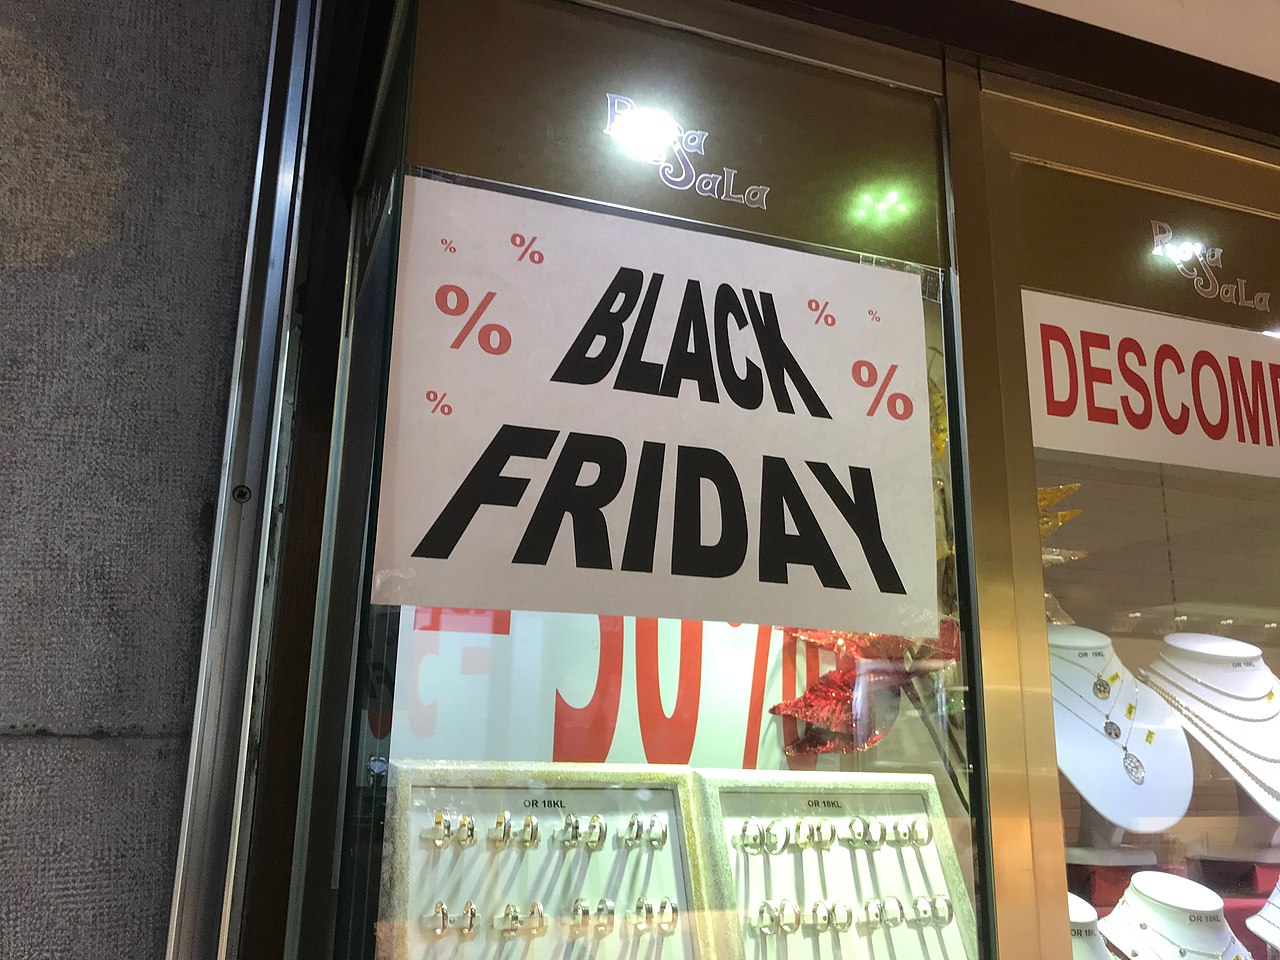 Drop in instore traffic on Black Friday as customers go digital; sales